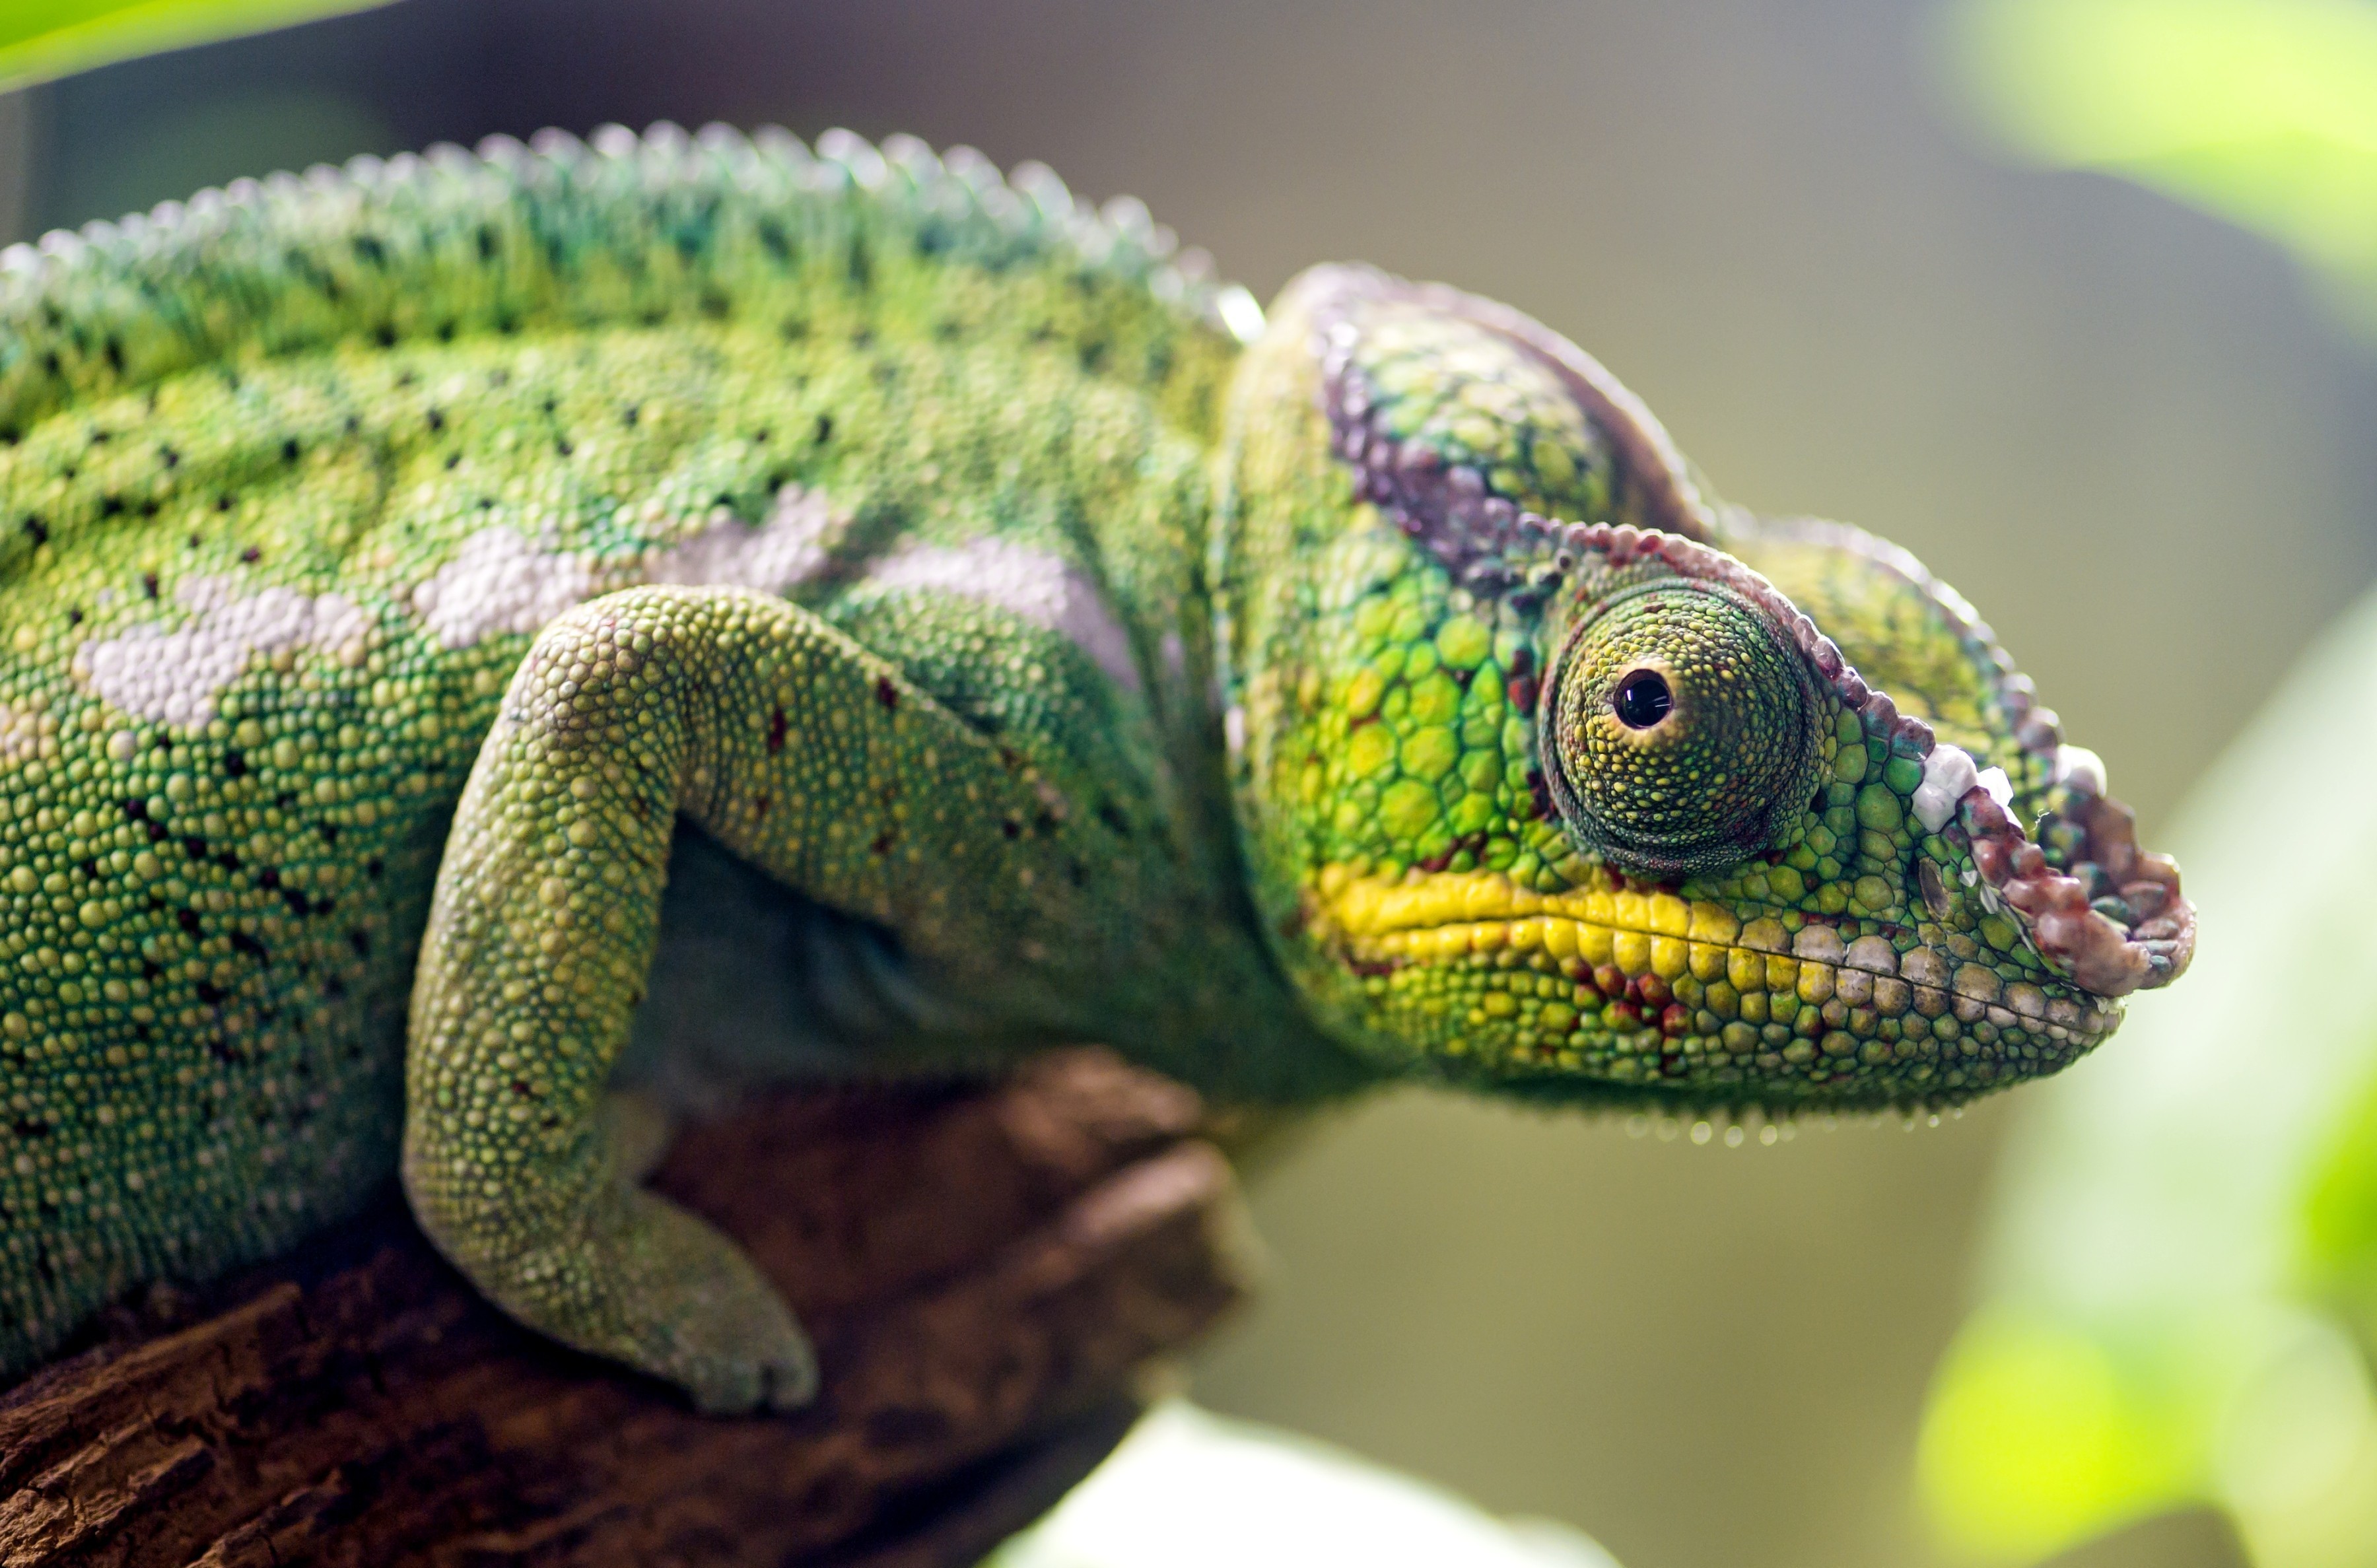 General 3600x2375 nature animals skin macro depth of field chameleons eyes green branch legs